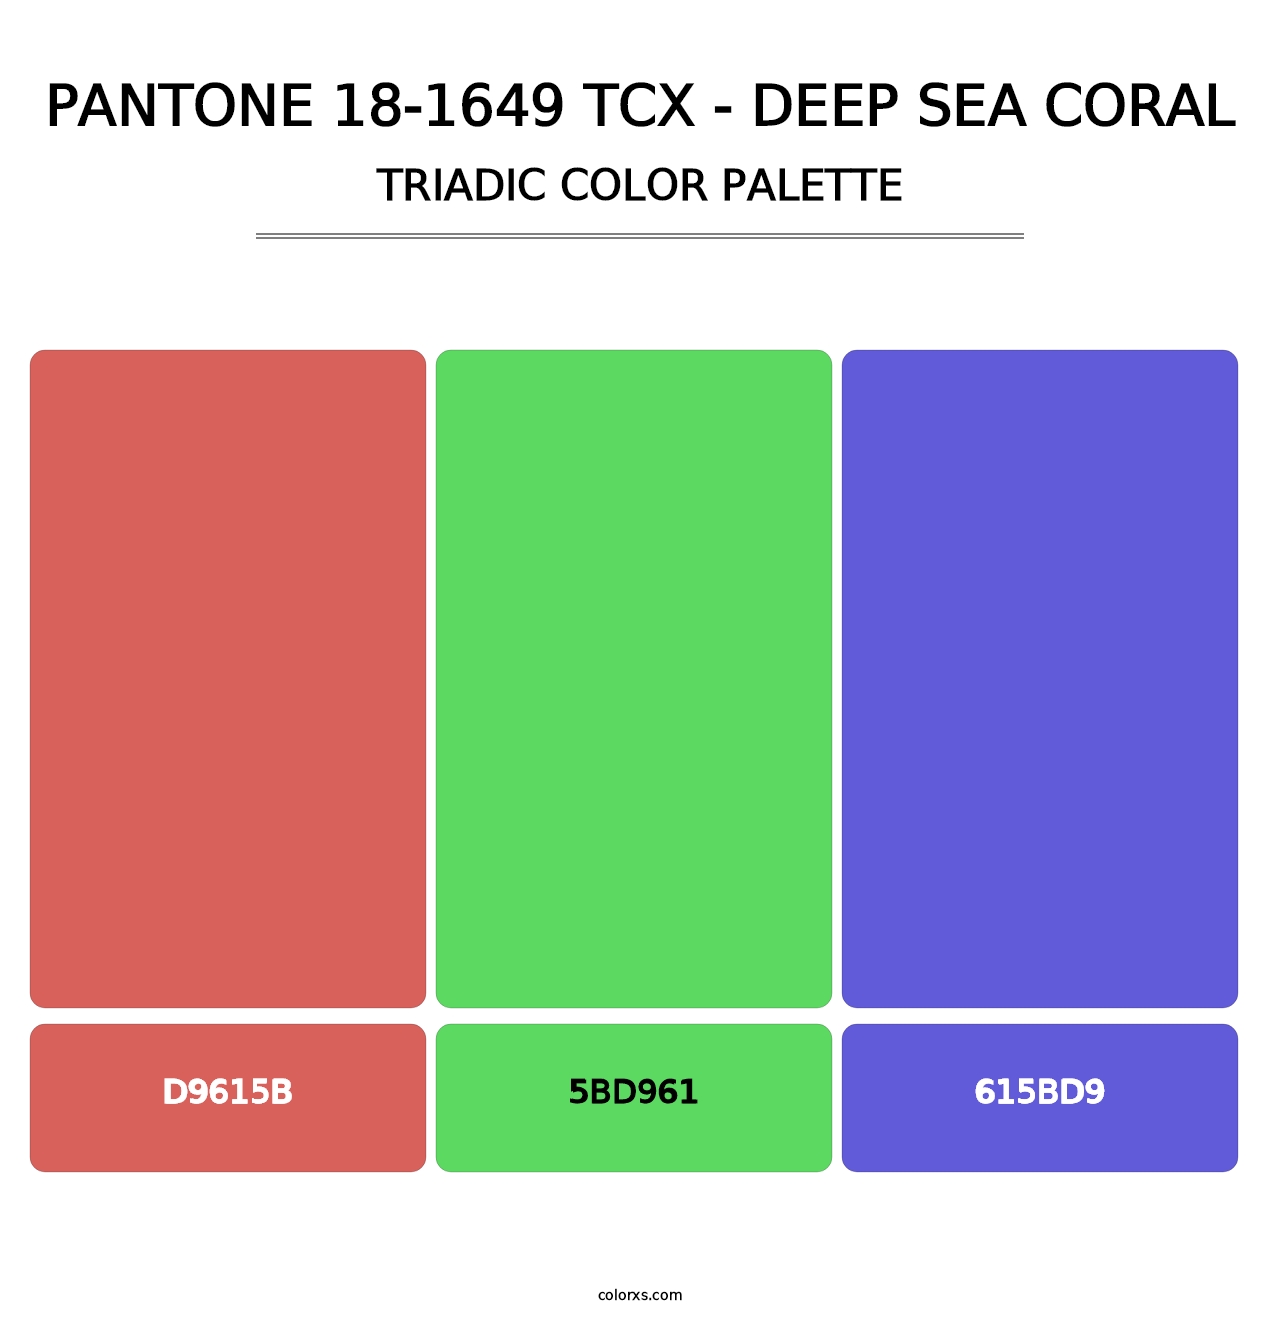 PANTONE 18-1649 TCX - Deep Sea Coral - Triadic Color Palette